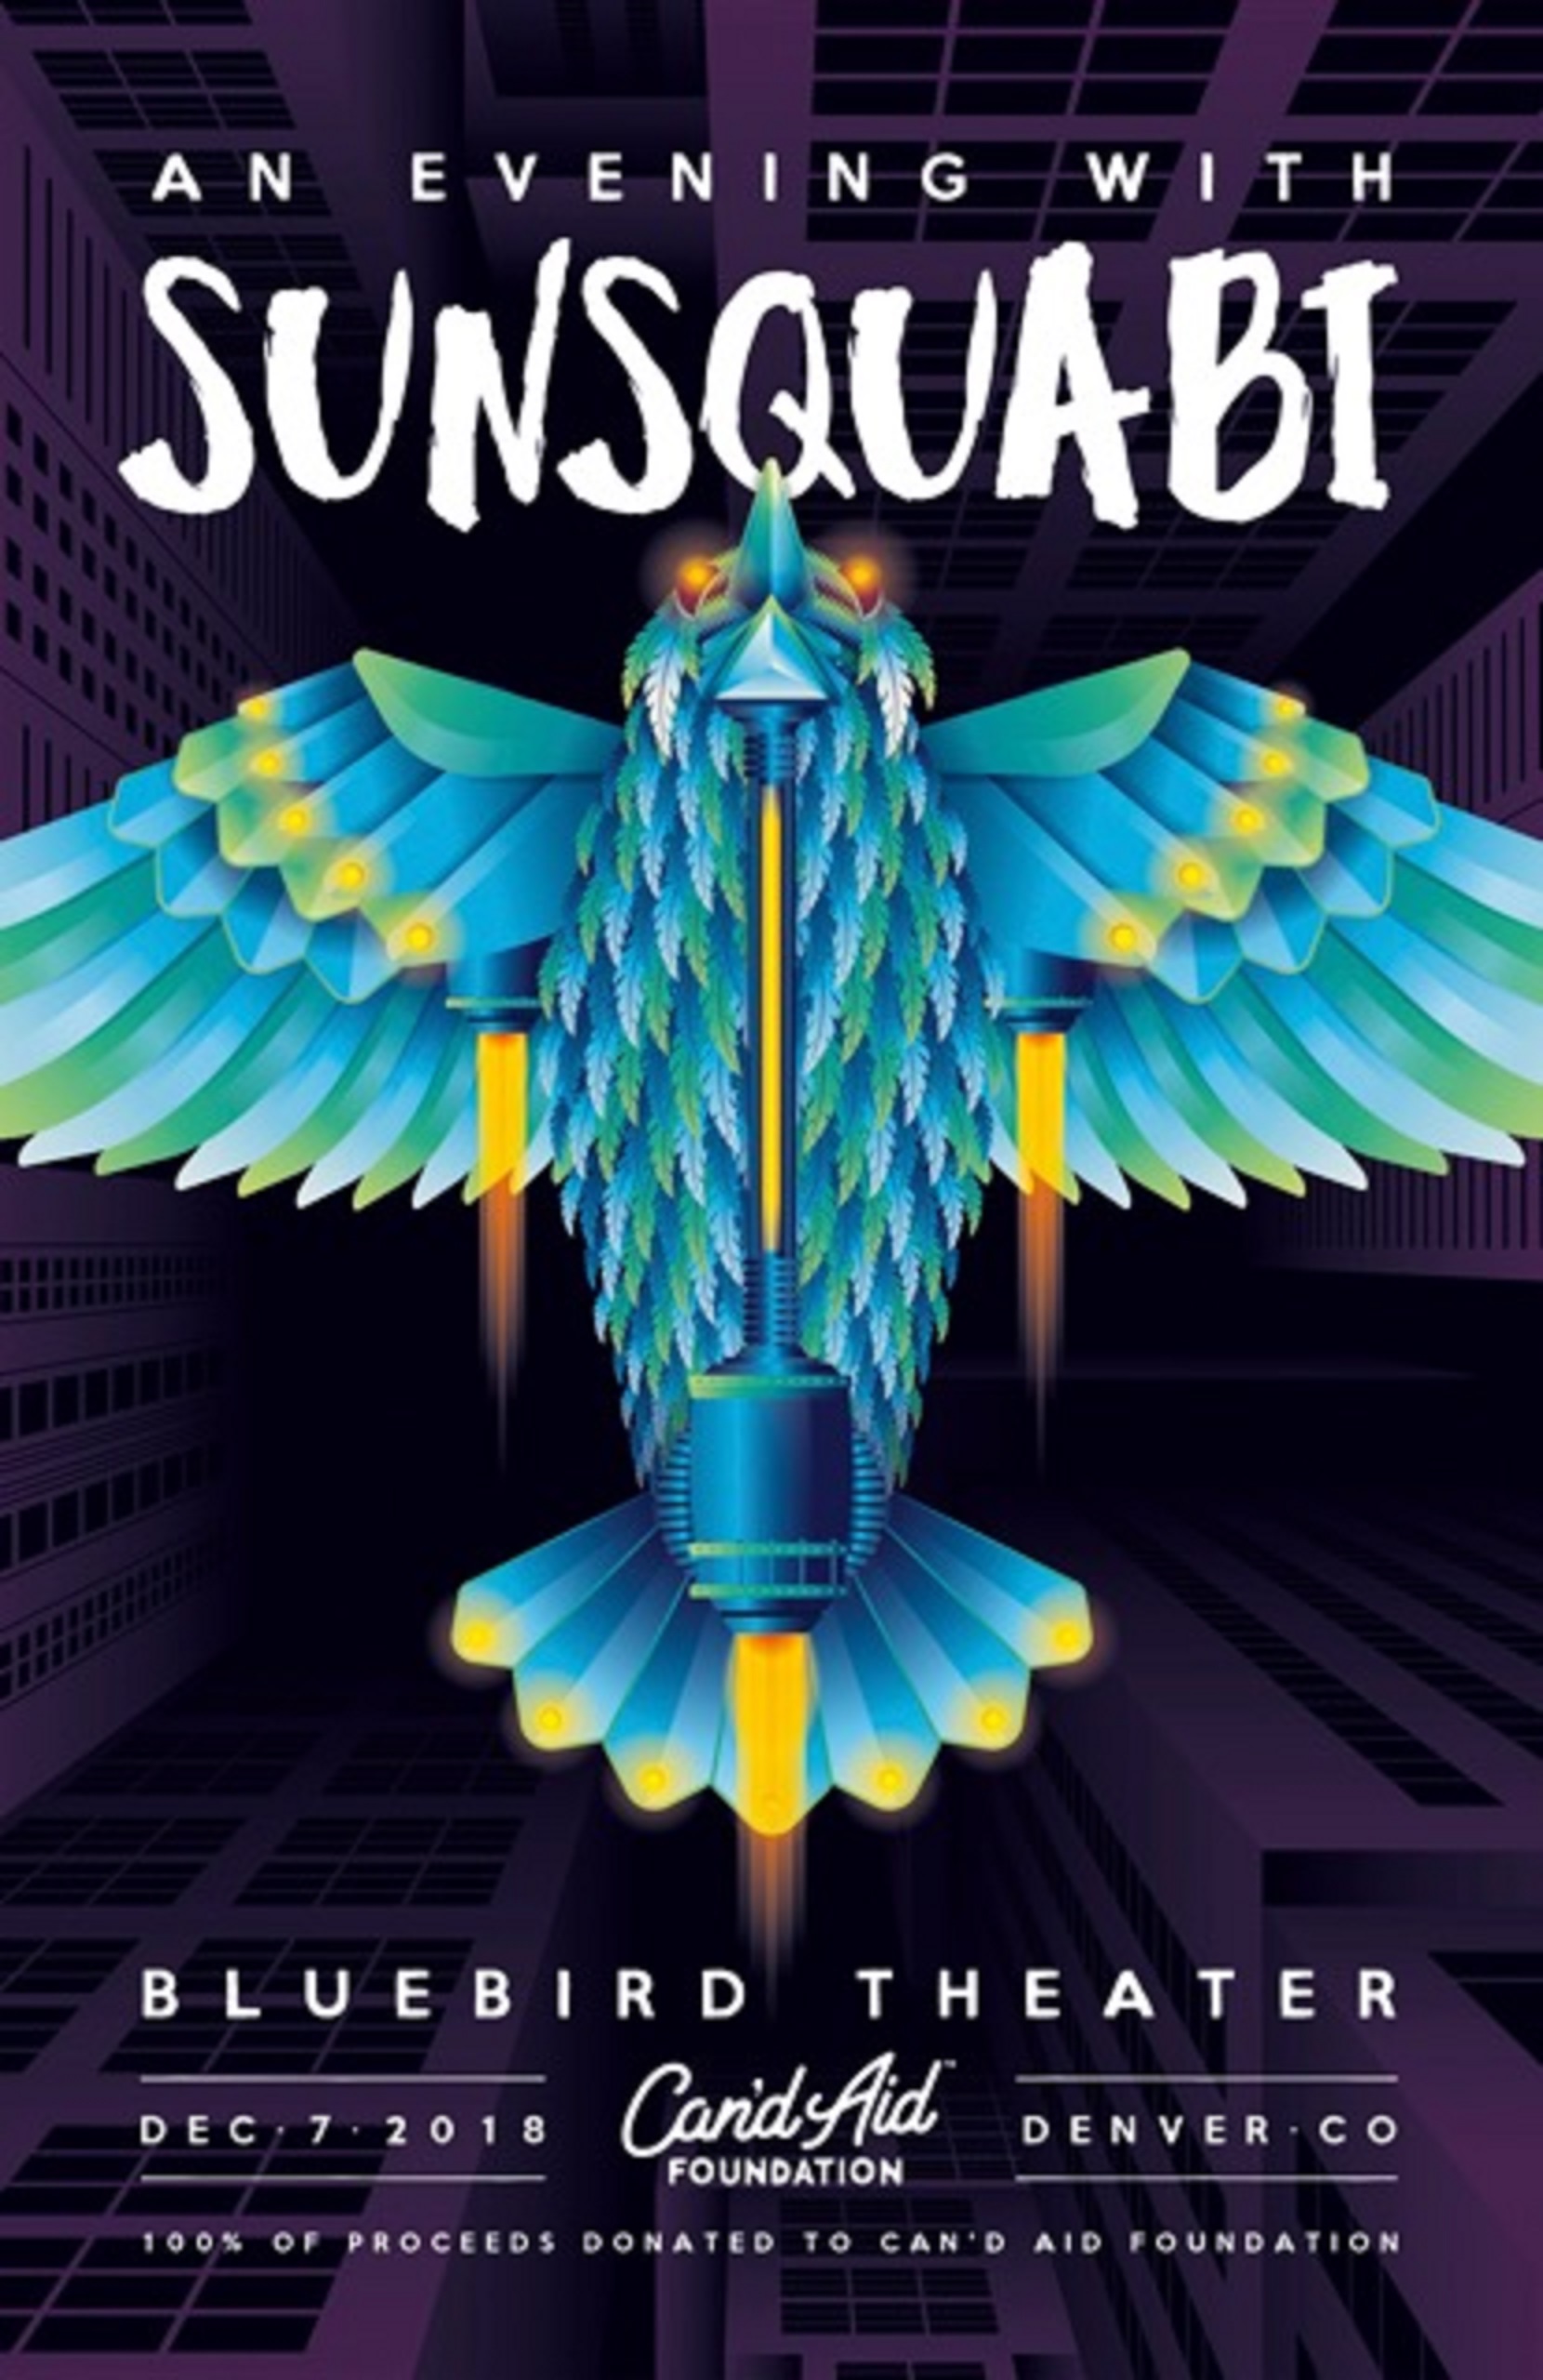 SunSquabi announces benefit concert in Denver- 12/7/18